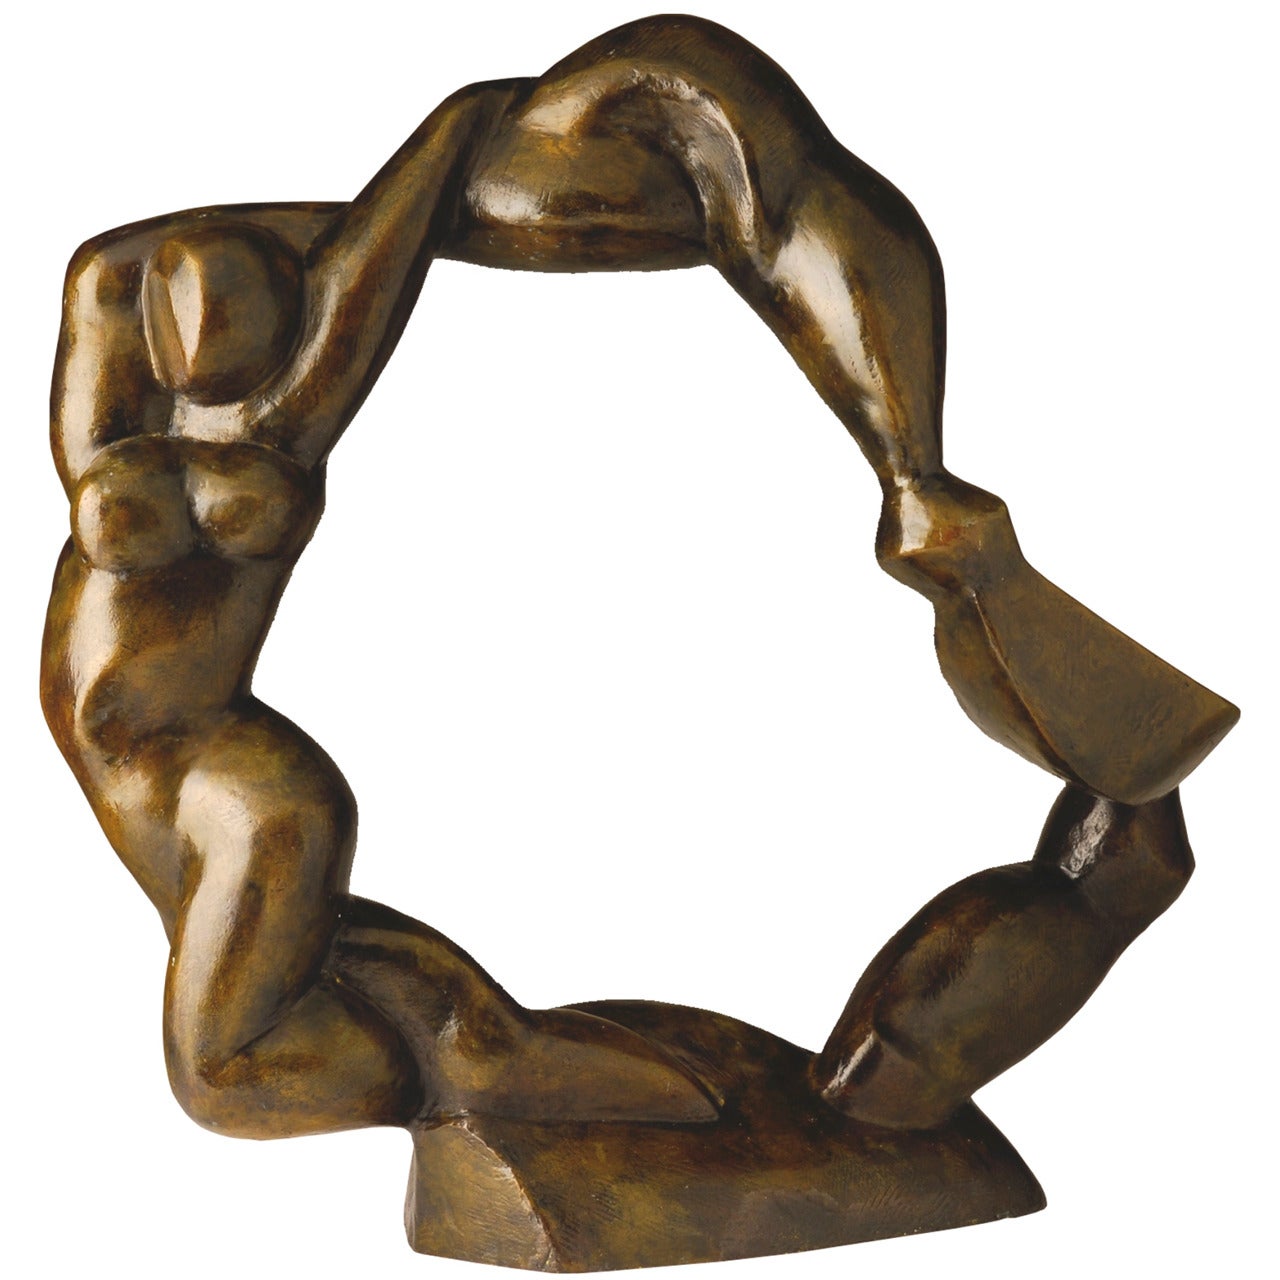 Henri Delcambre “L’ Espace” 1973 Sculpture, Limited Edition Four of Eight For Sale